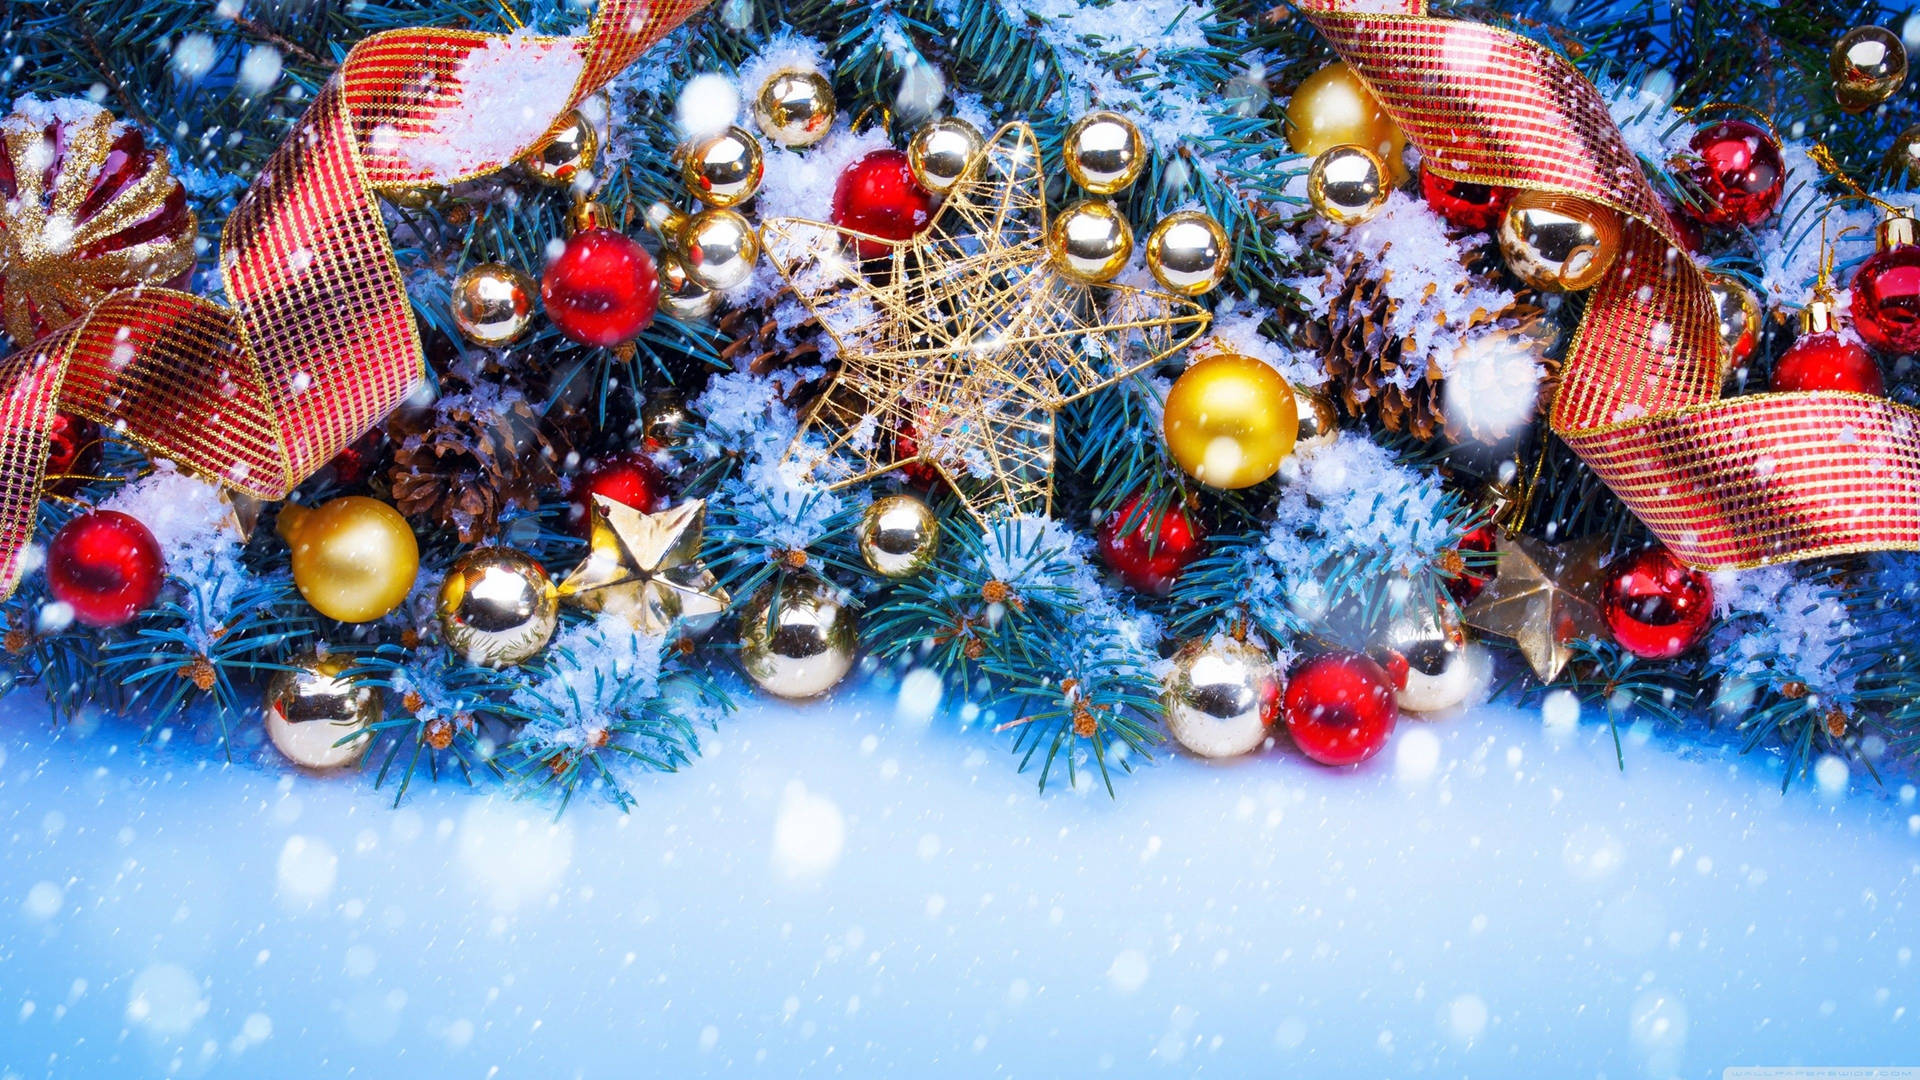 Festive Christmas Balls Decoration With Snow Wallpaper